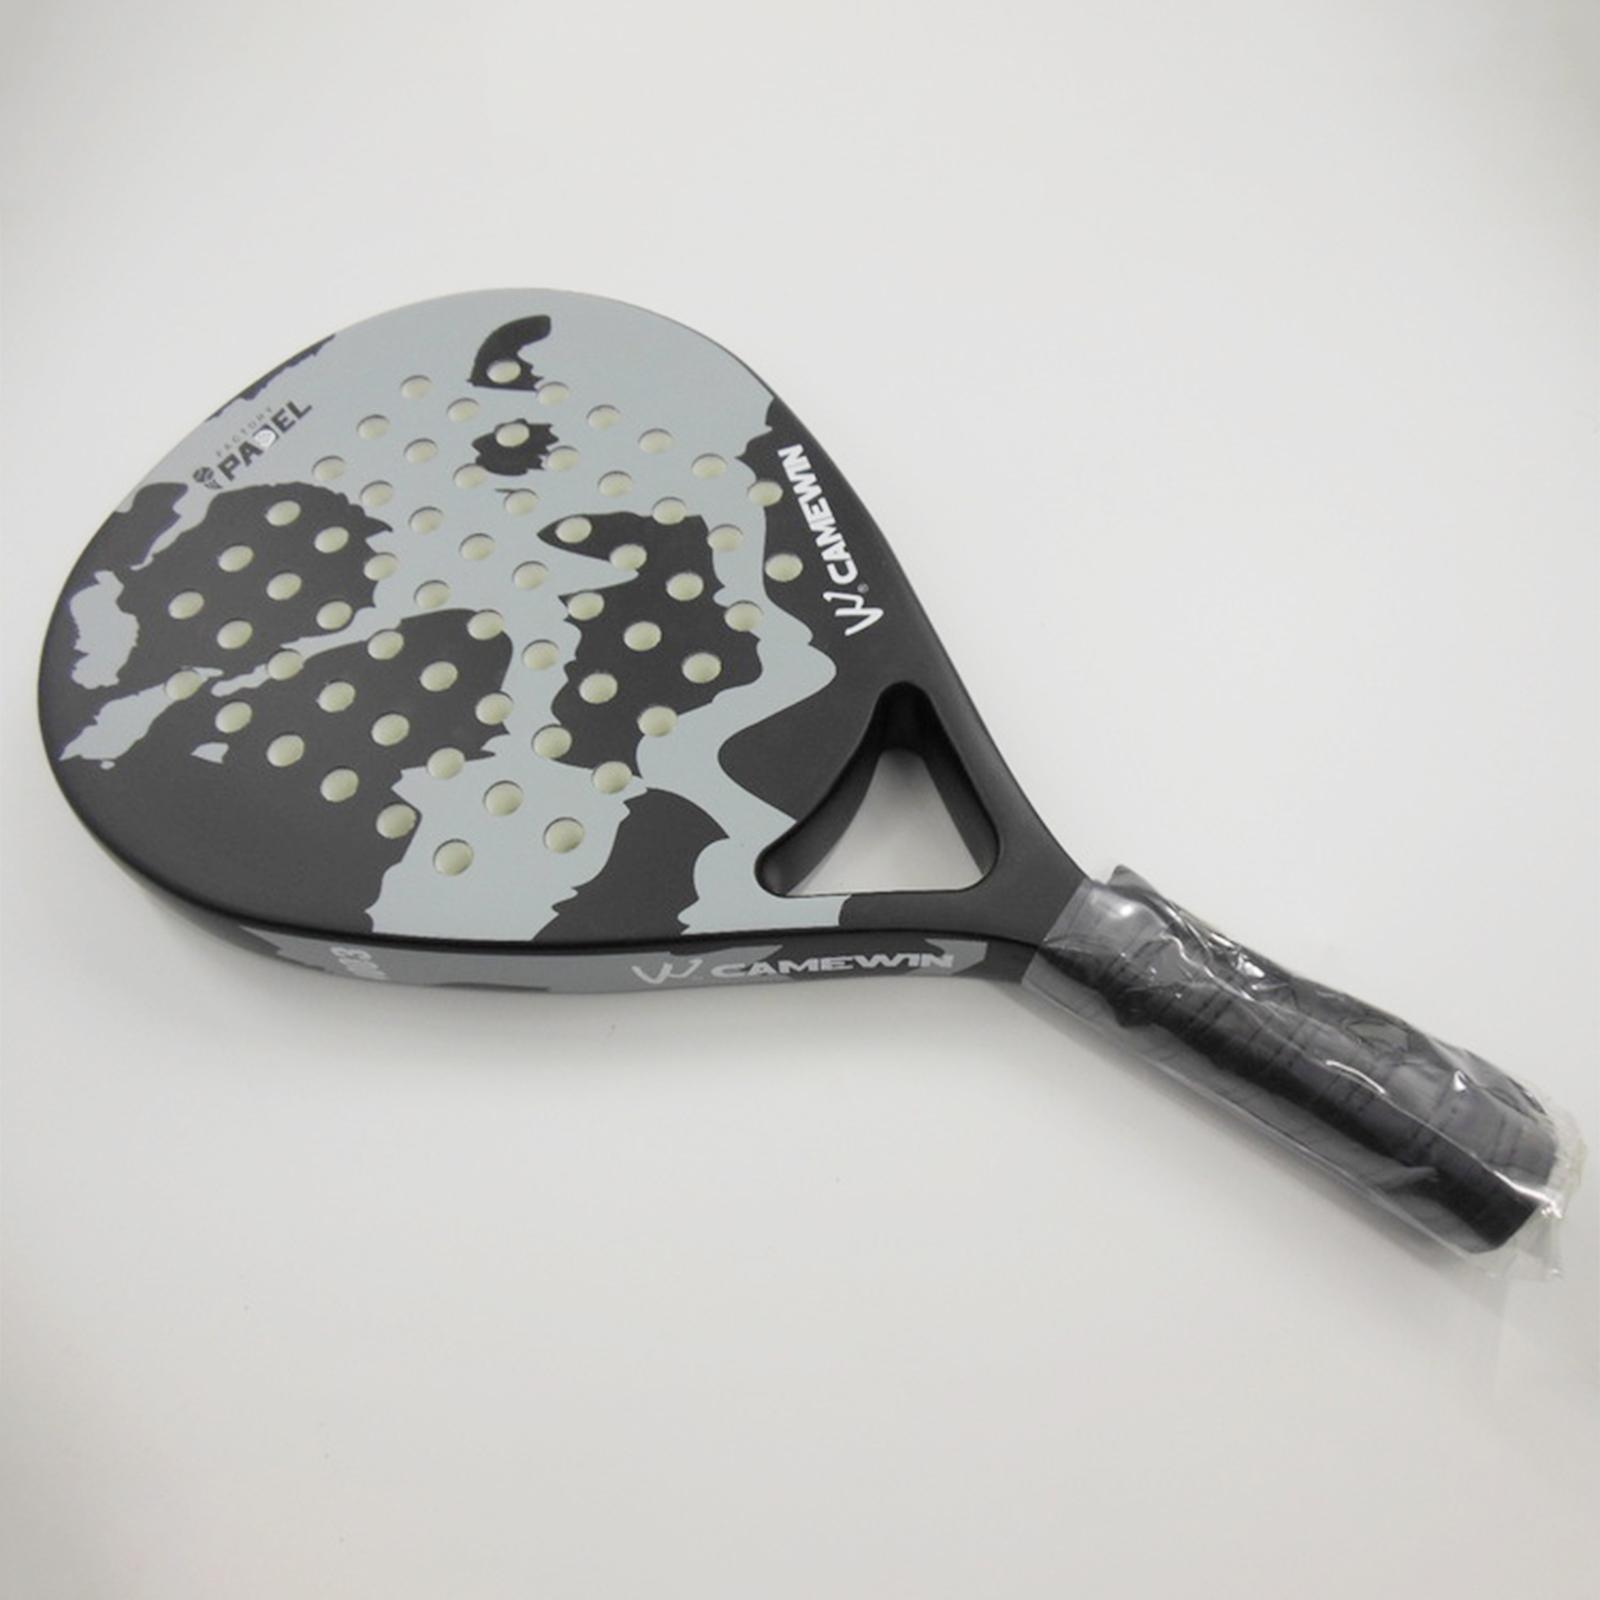 Pro Paddle Tennis Racket Student Beginner Adult Carbon Fiber Grit Face